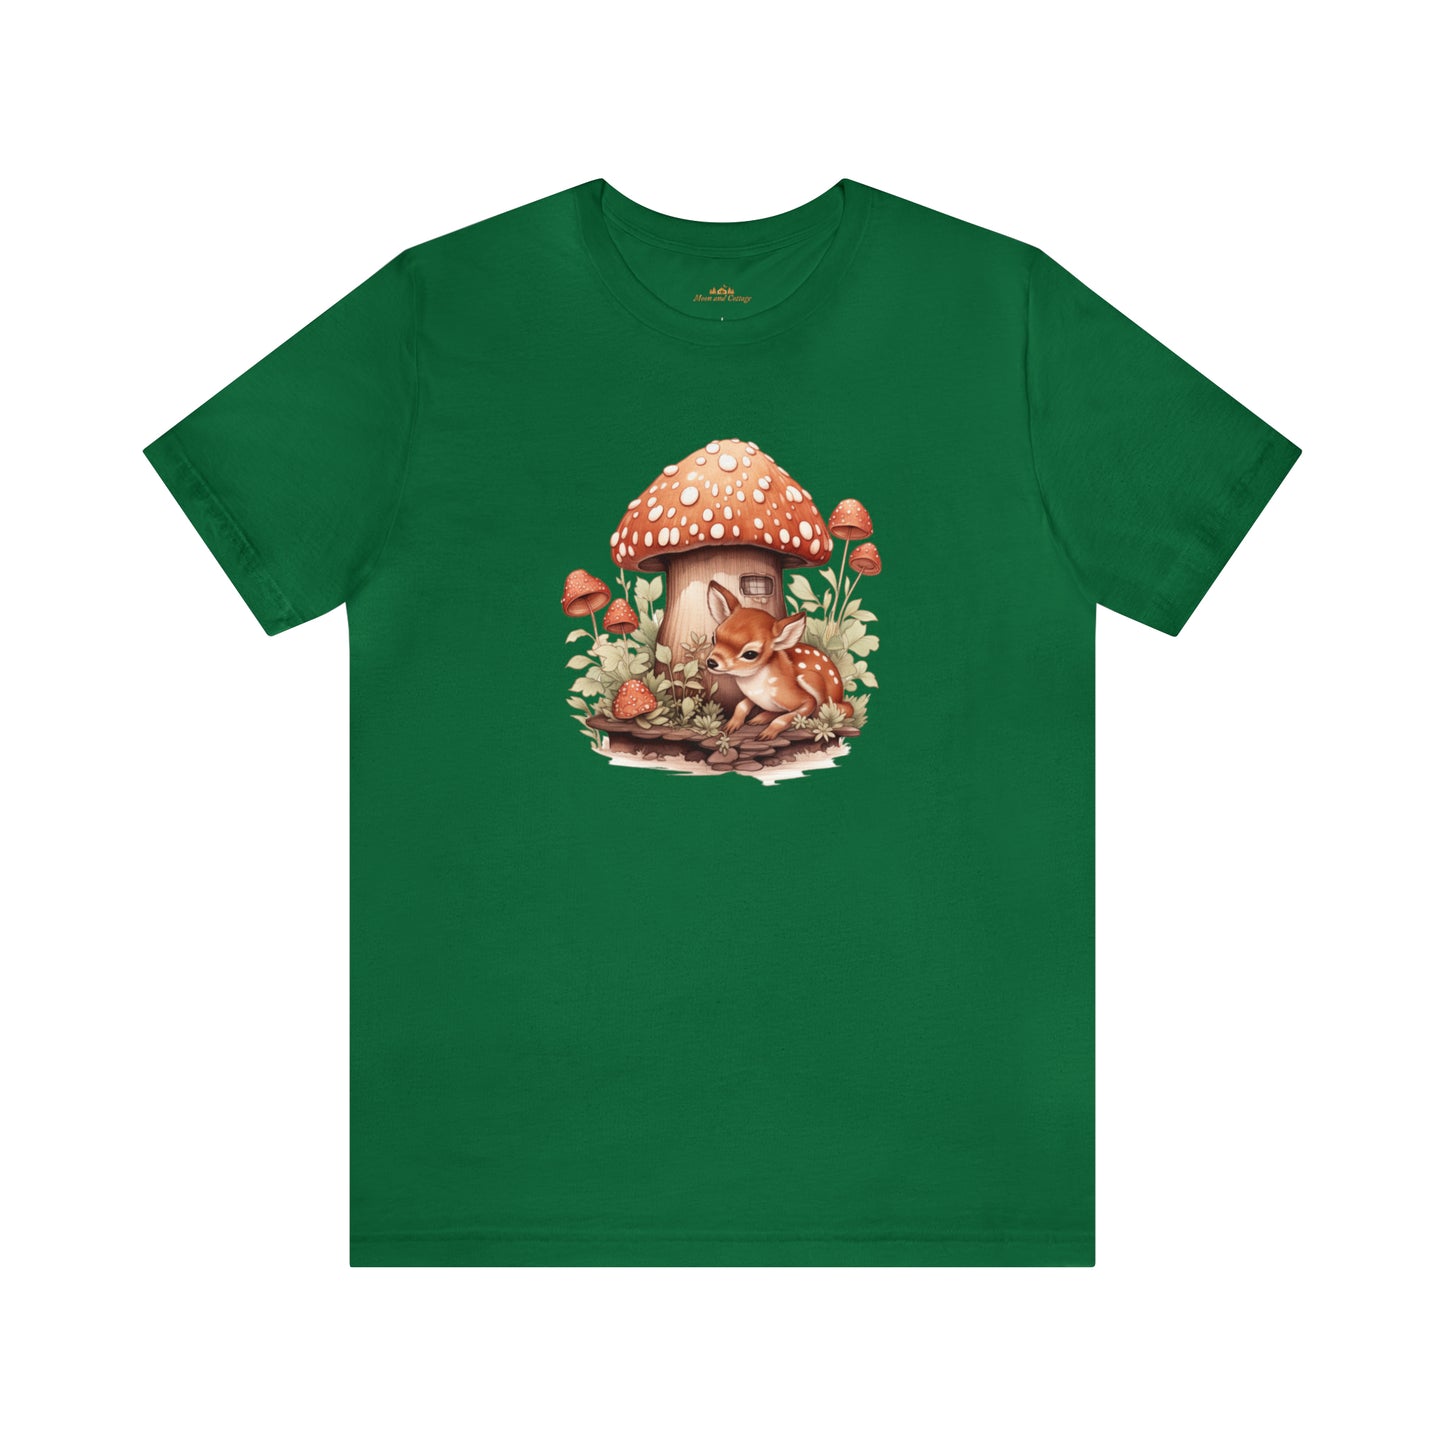 Cottagecore Aesthetic, Baby Deer Mushroom House, Vintage Y2k T-Shirt